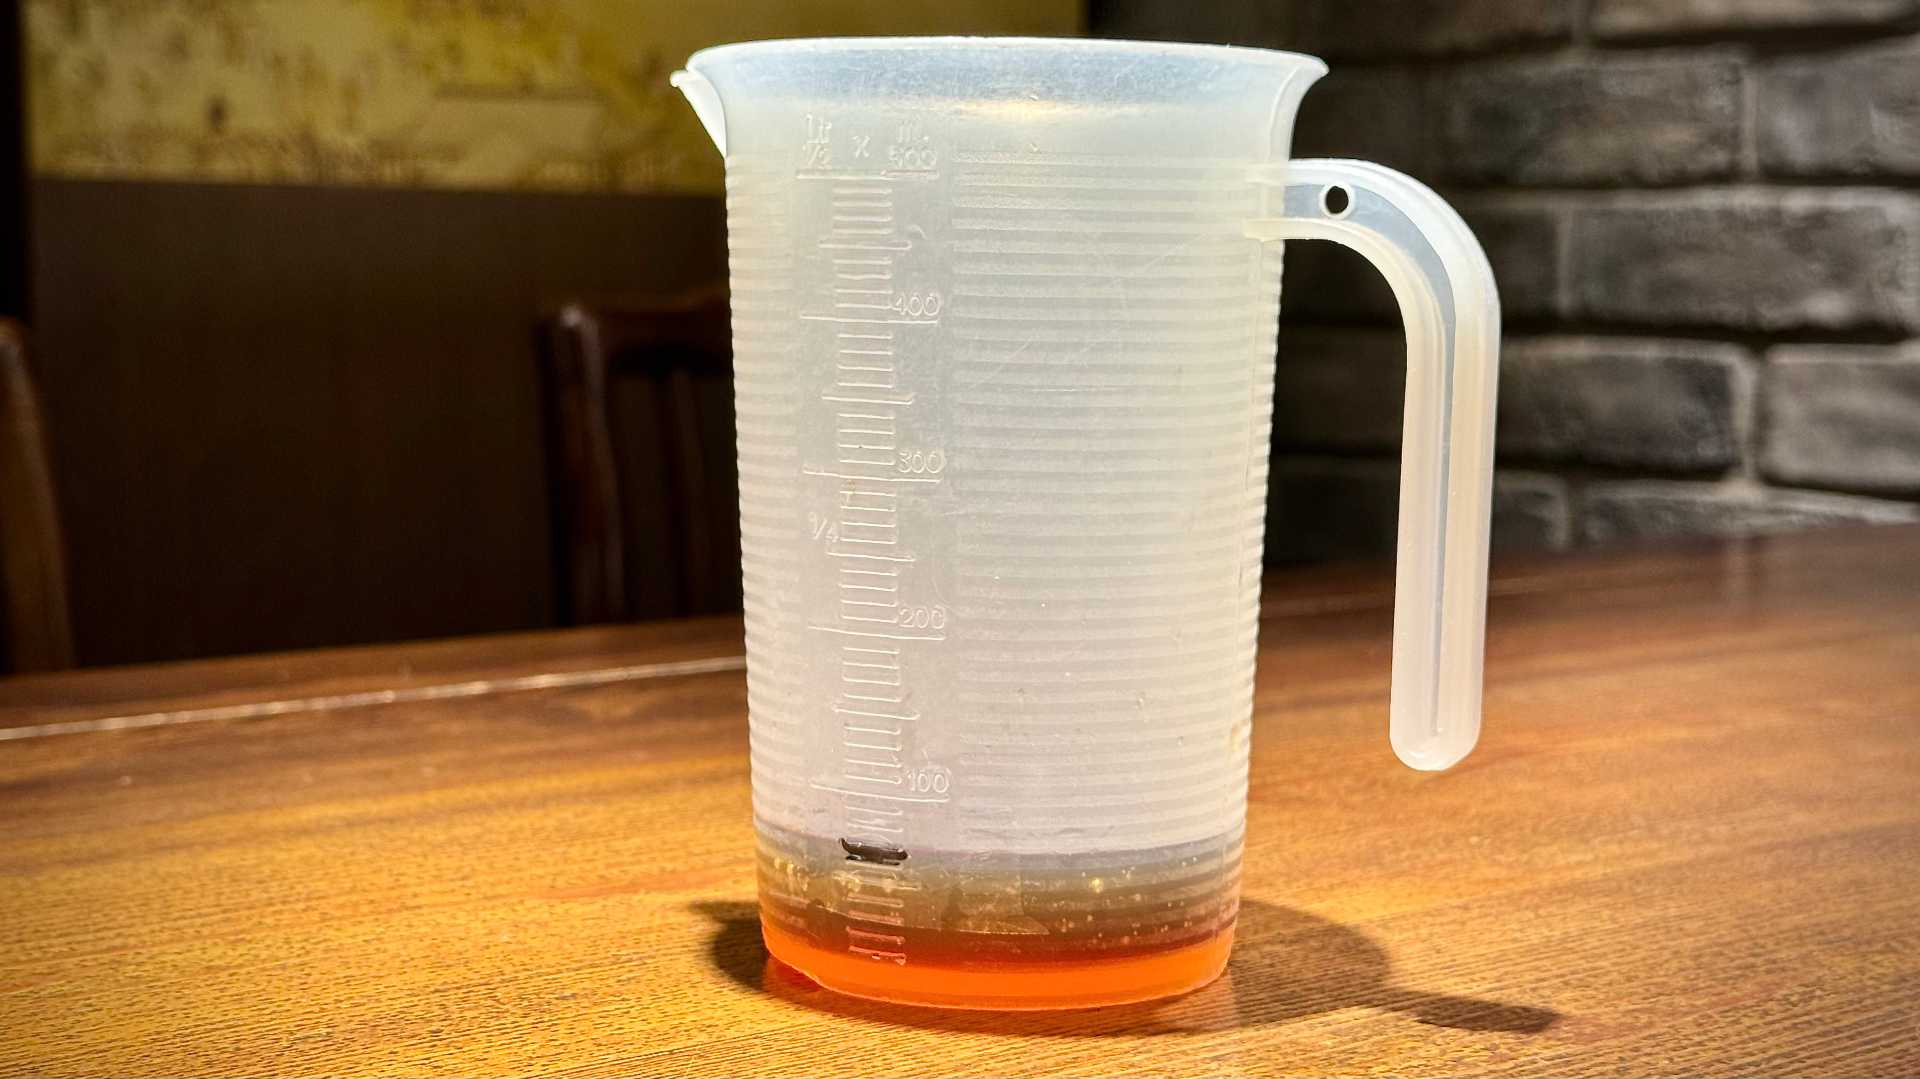 A plastic measuring jug containing 70mL of black tea.